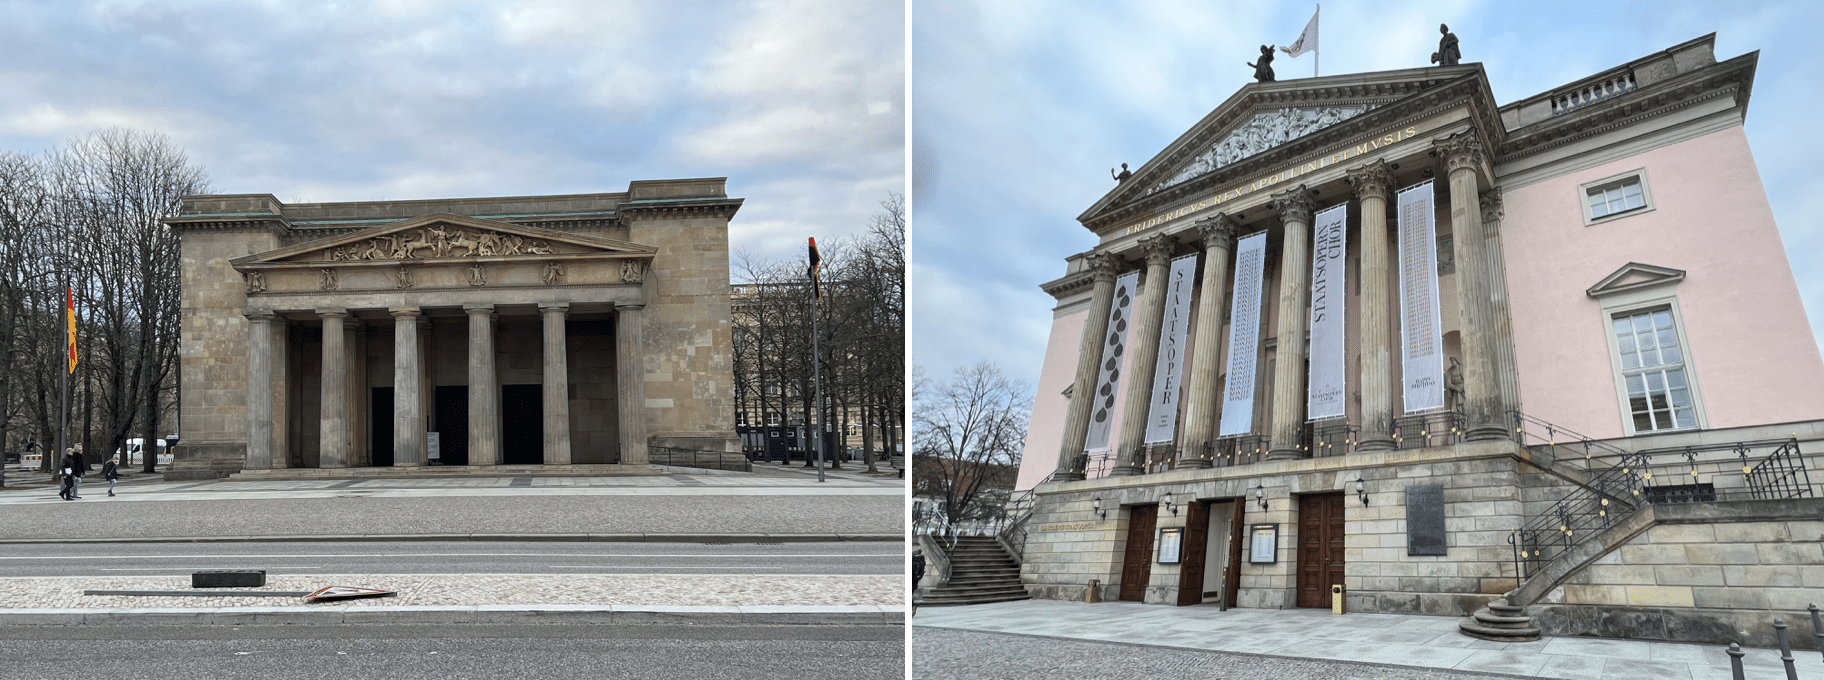 l edifice de la nouvelle garde et l opera d etat a berlin